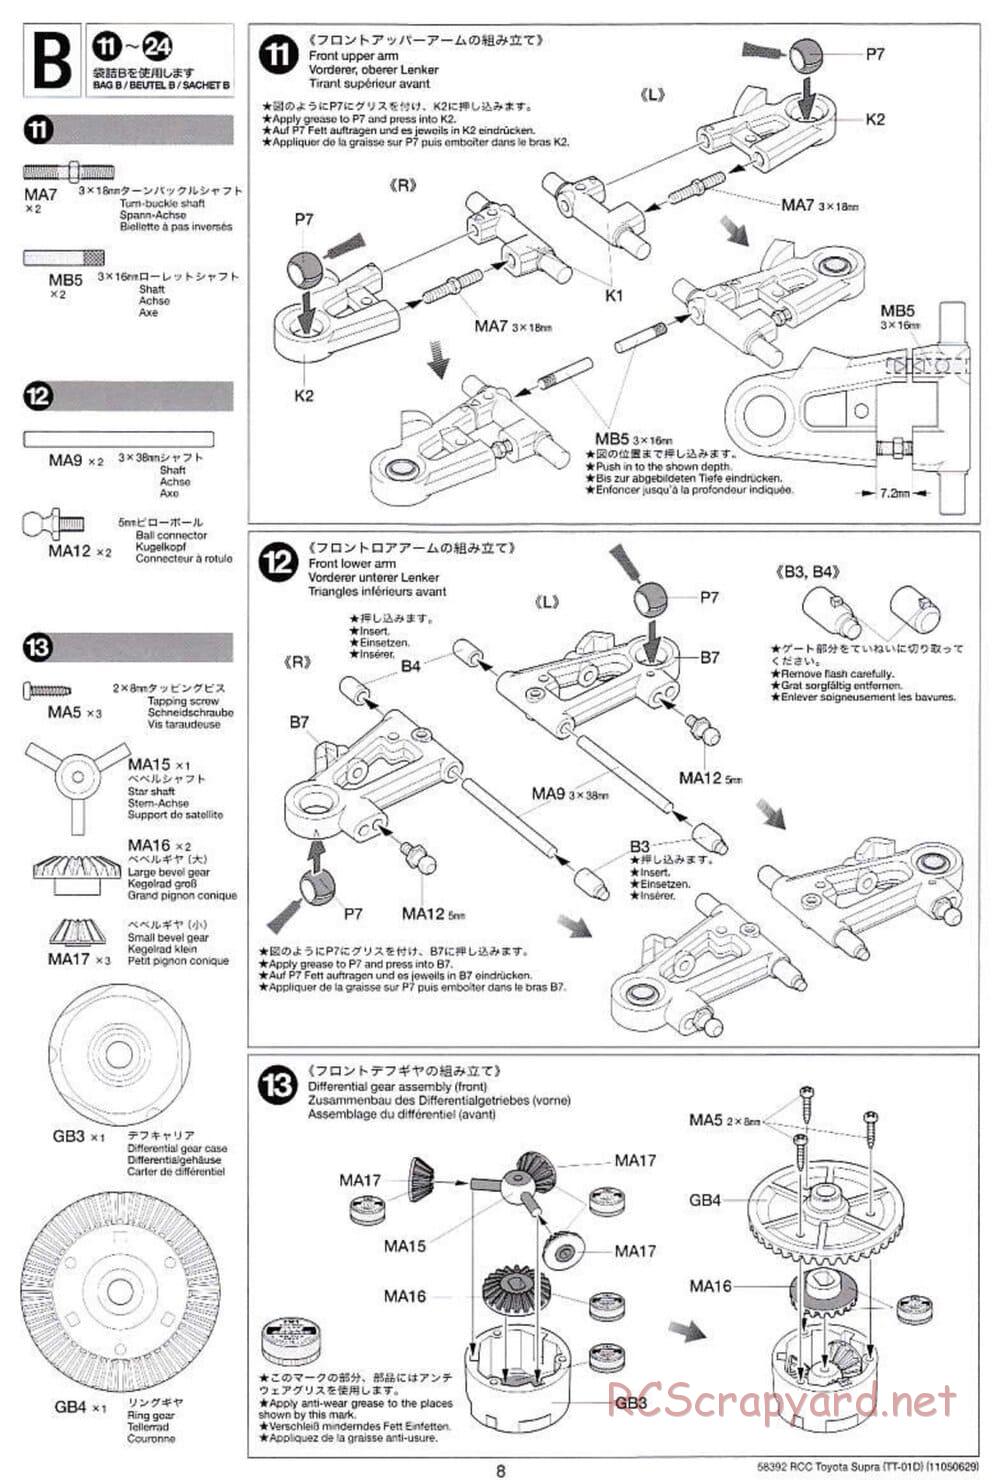 Tamiya - Toyota Supra - Drift Spec - TT-01D Chassis - Manual - Page 8